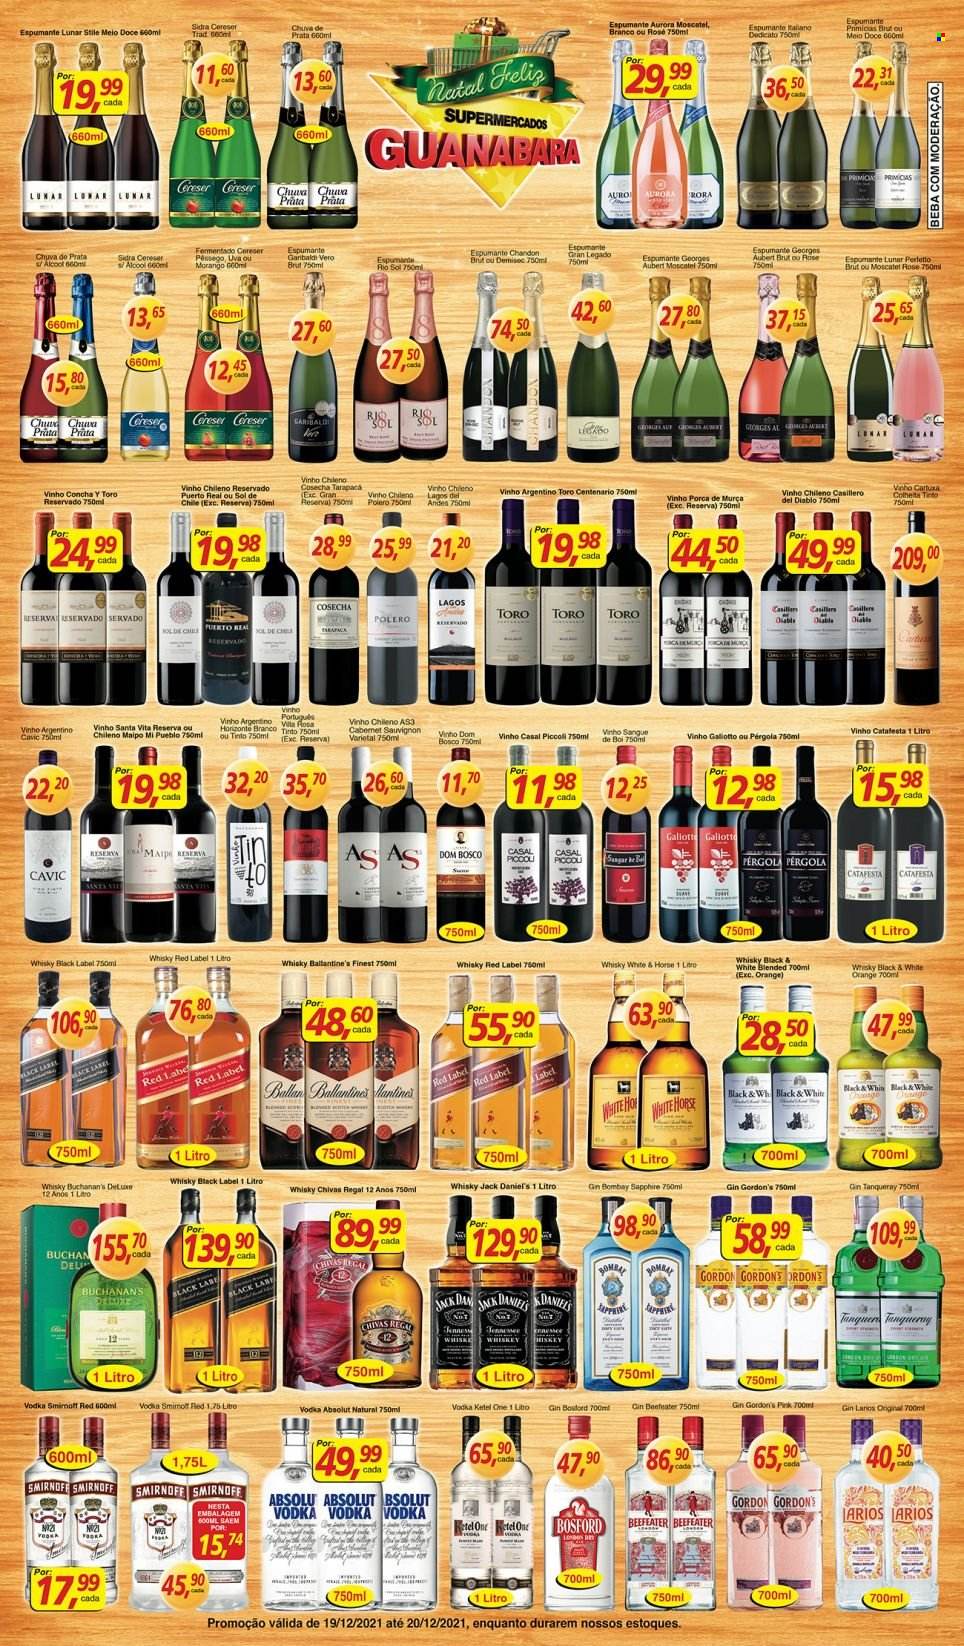 thumbnail - Folheto Supermercados Guanabara - 19/12/2021 - 20/12/2021 - Produtos em promoção - uva, pêssego, Aurora, vinho, espumante, moscatel, pérgola, vinho argentino, vinho chileno, Absolut Vodka, Beefeater, gin, Jack Daniel's, vodka, whiskey, sidra, Smirnoff, Gordon’s, Sapphire, Chivas Regal, Ballantine's, Tanqueray. Página 4.